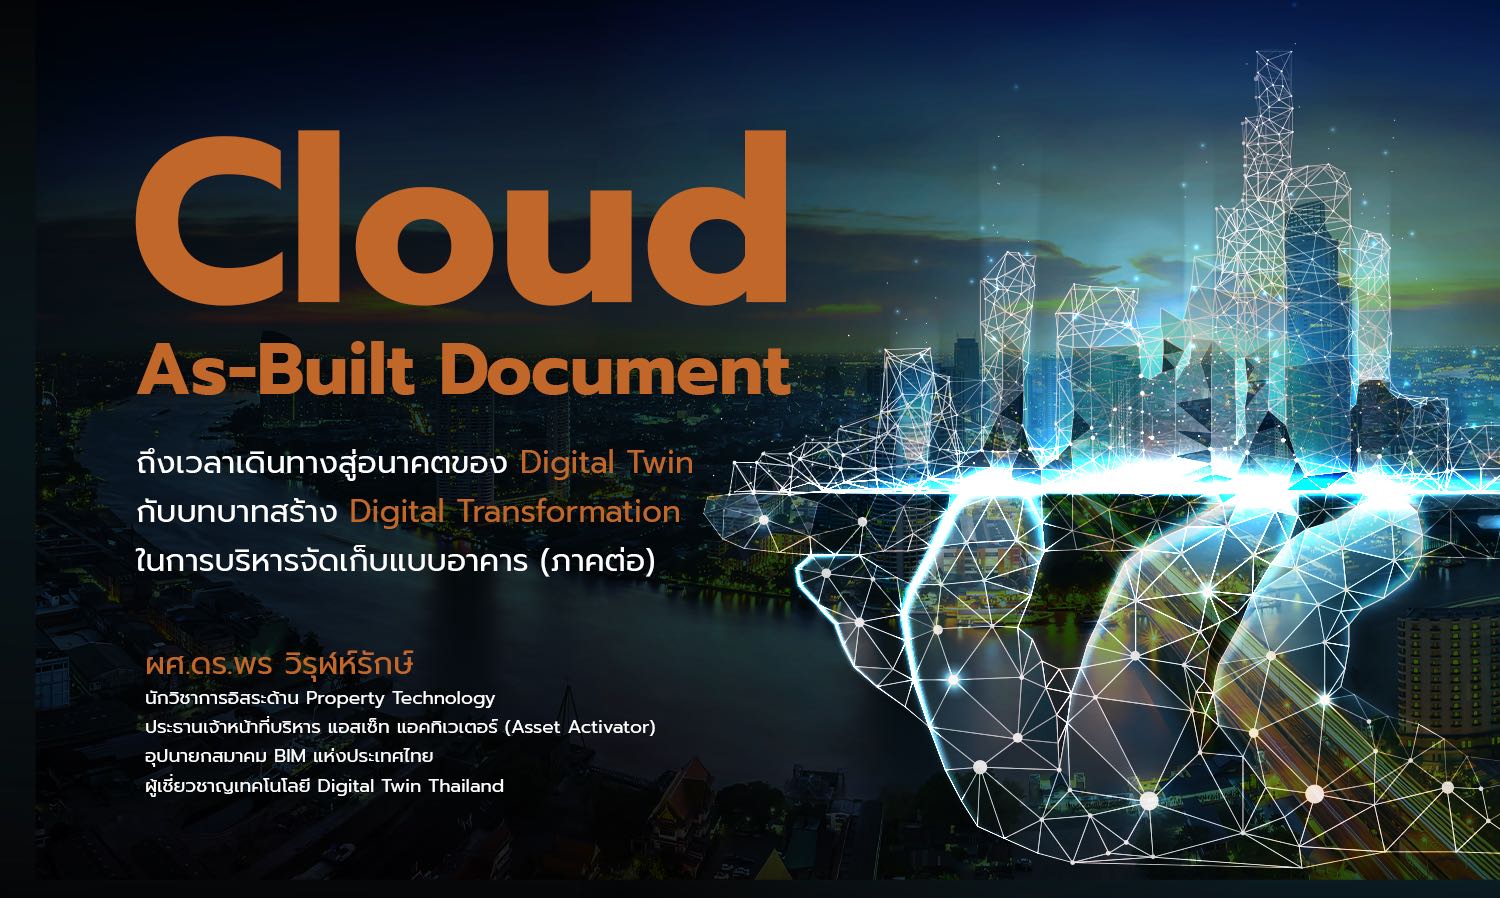 Cloud As-Built Document ถึงเวลาเดินทางสู่อนาคตของ Digital Twin กับบทบาทสร้าง Digital Transformation ในการบริหารจัดเก็บแบบอาคาร (ภาคต่อ)